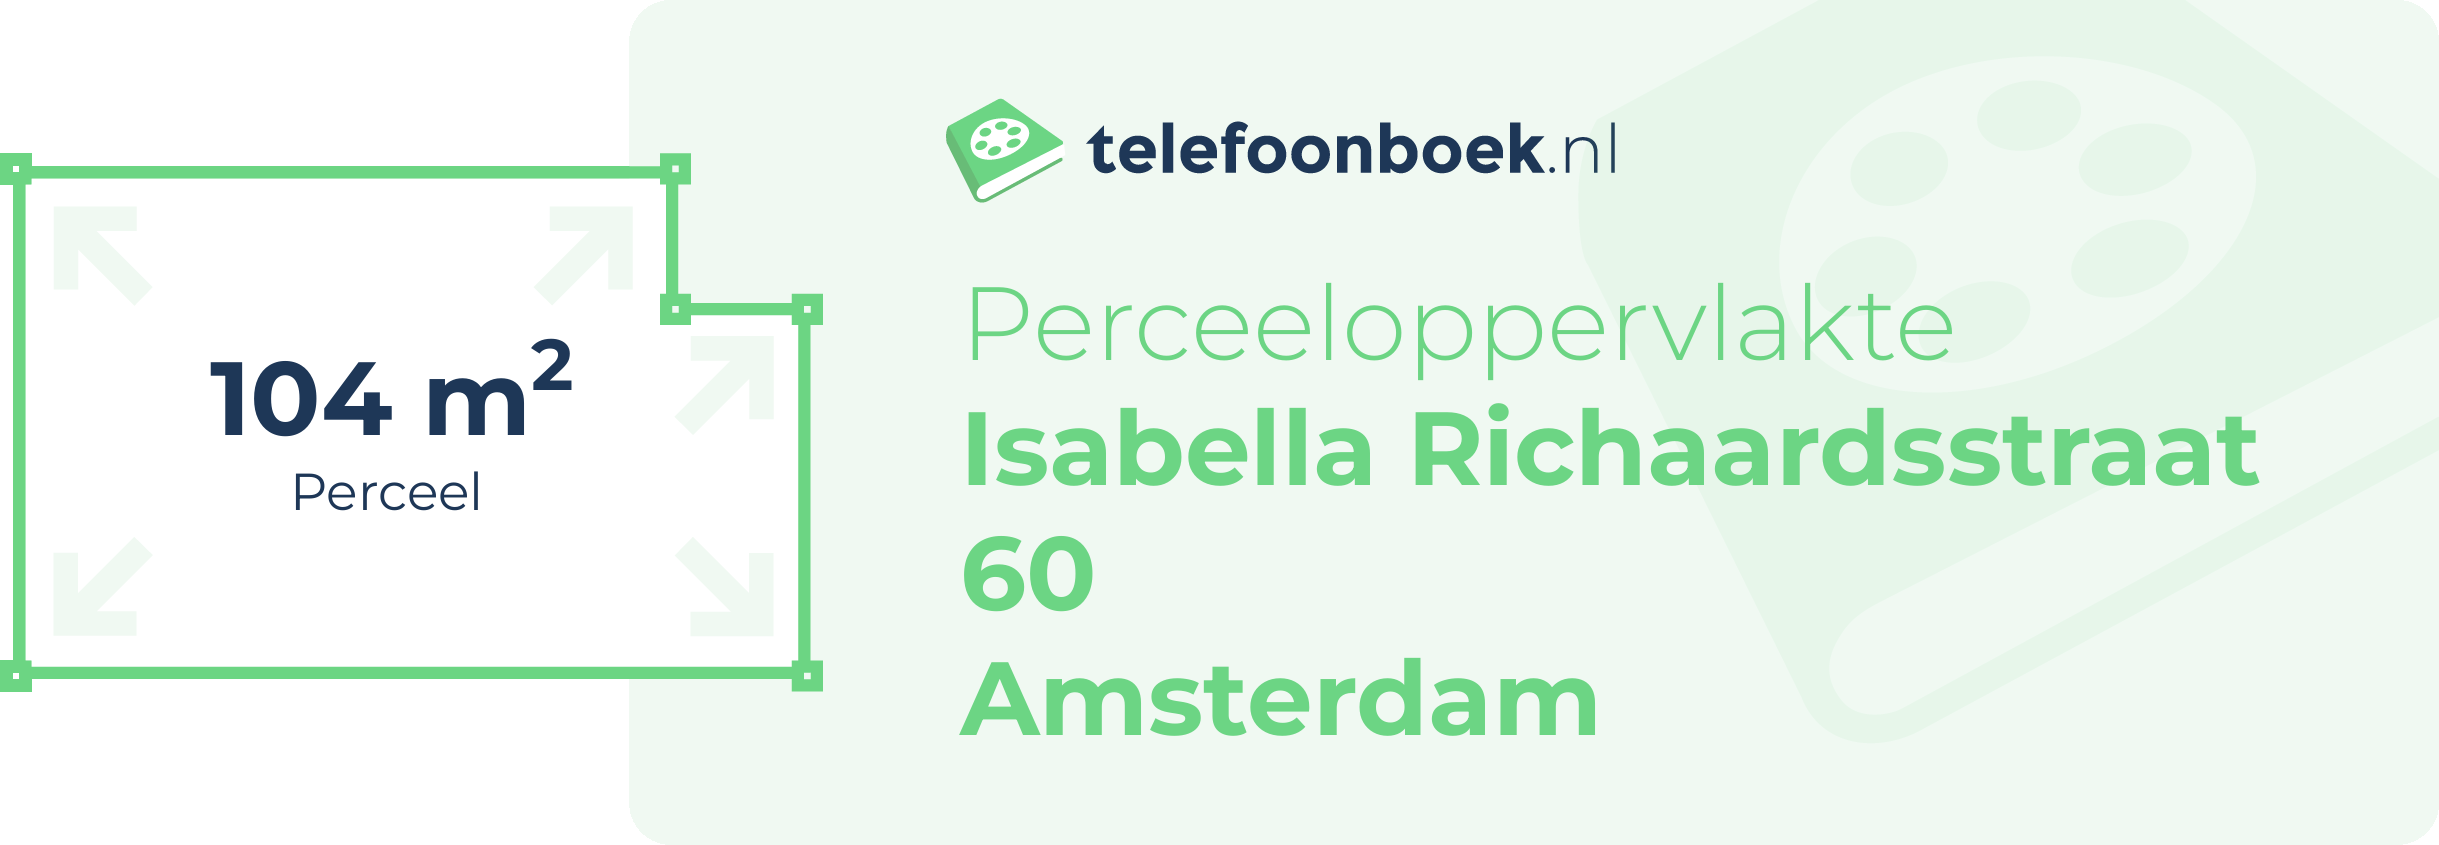 Perceeloppervlakte Isabella Richaardsstraat 60 Amsterdam